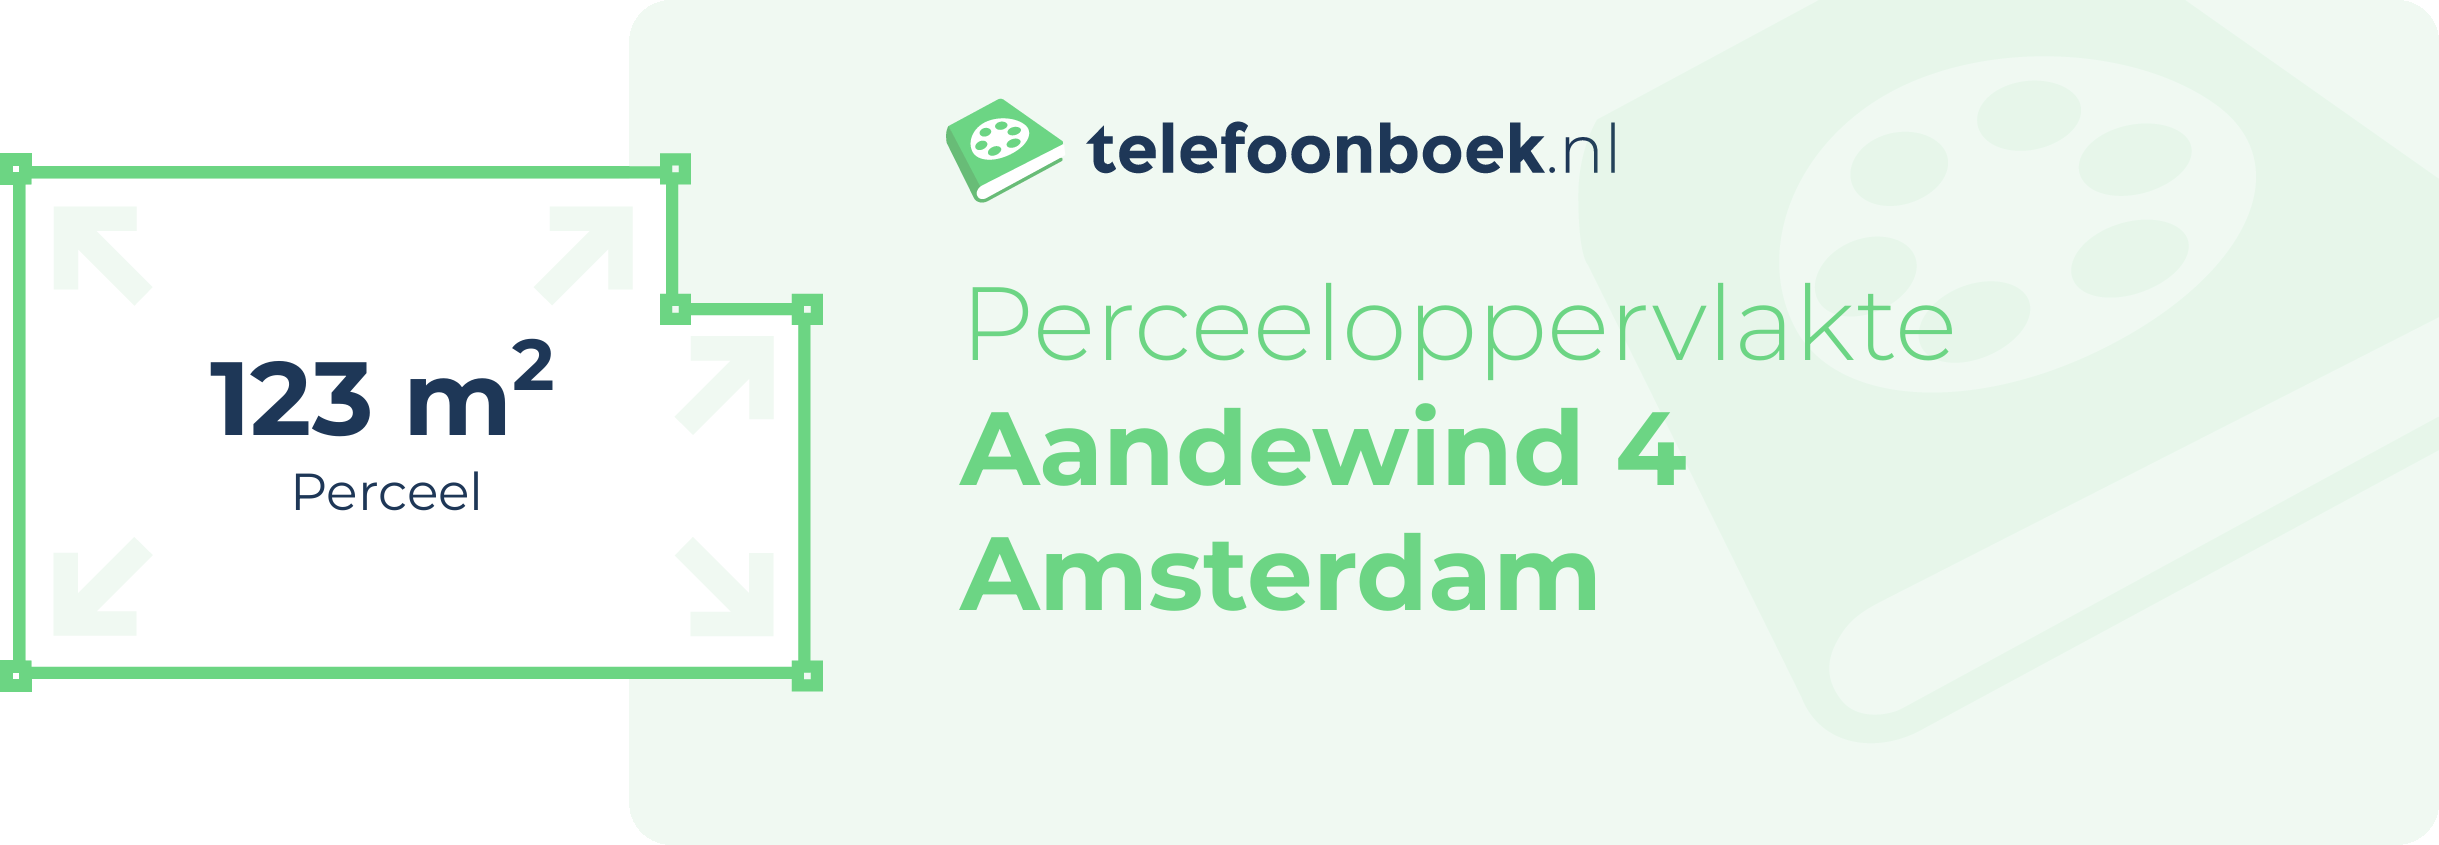 Perceeloppervlakte Aandewind 4 Amsterdam